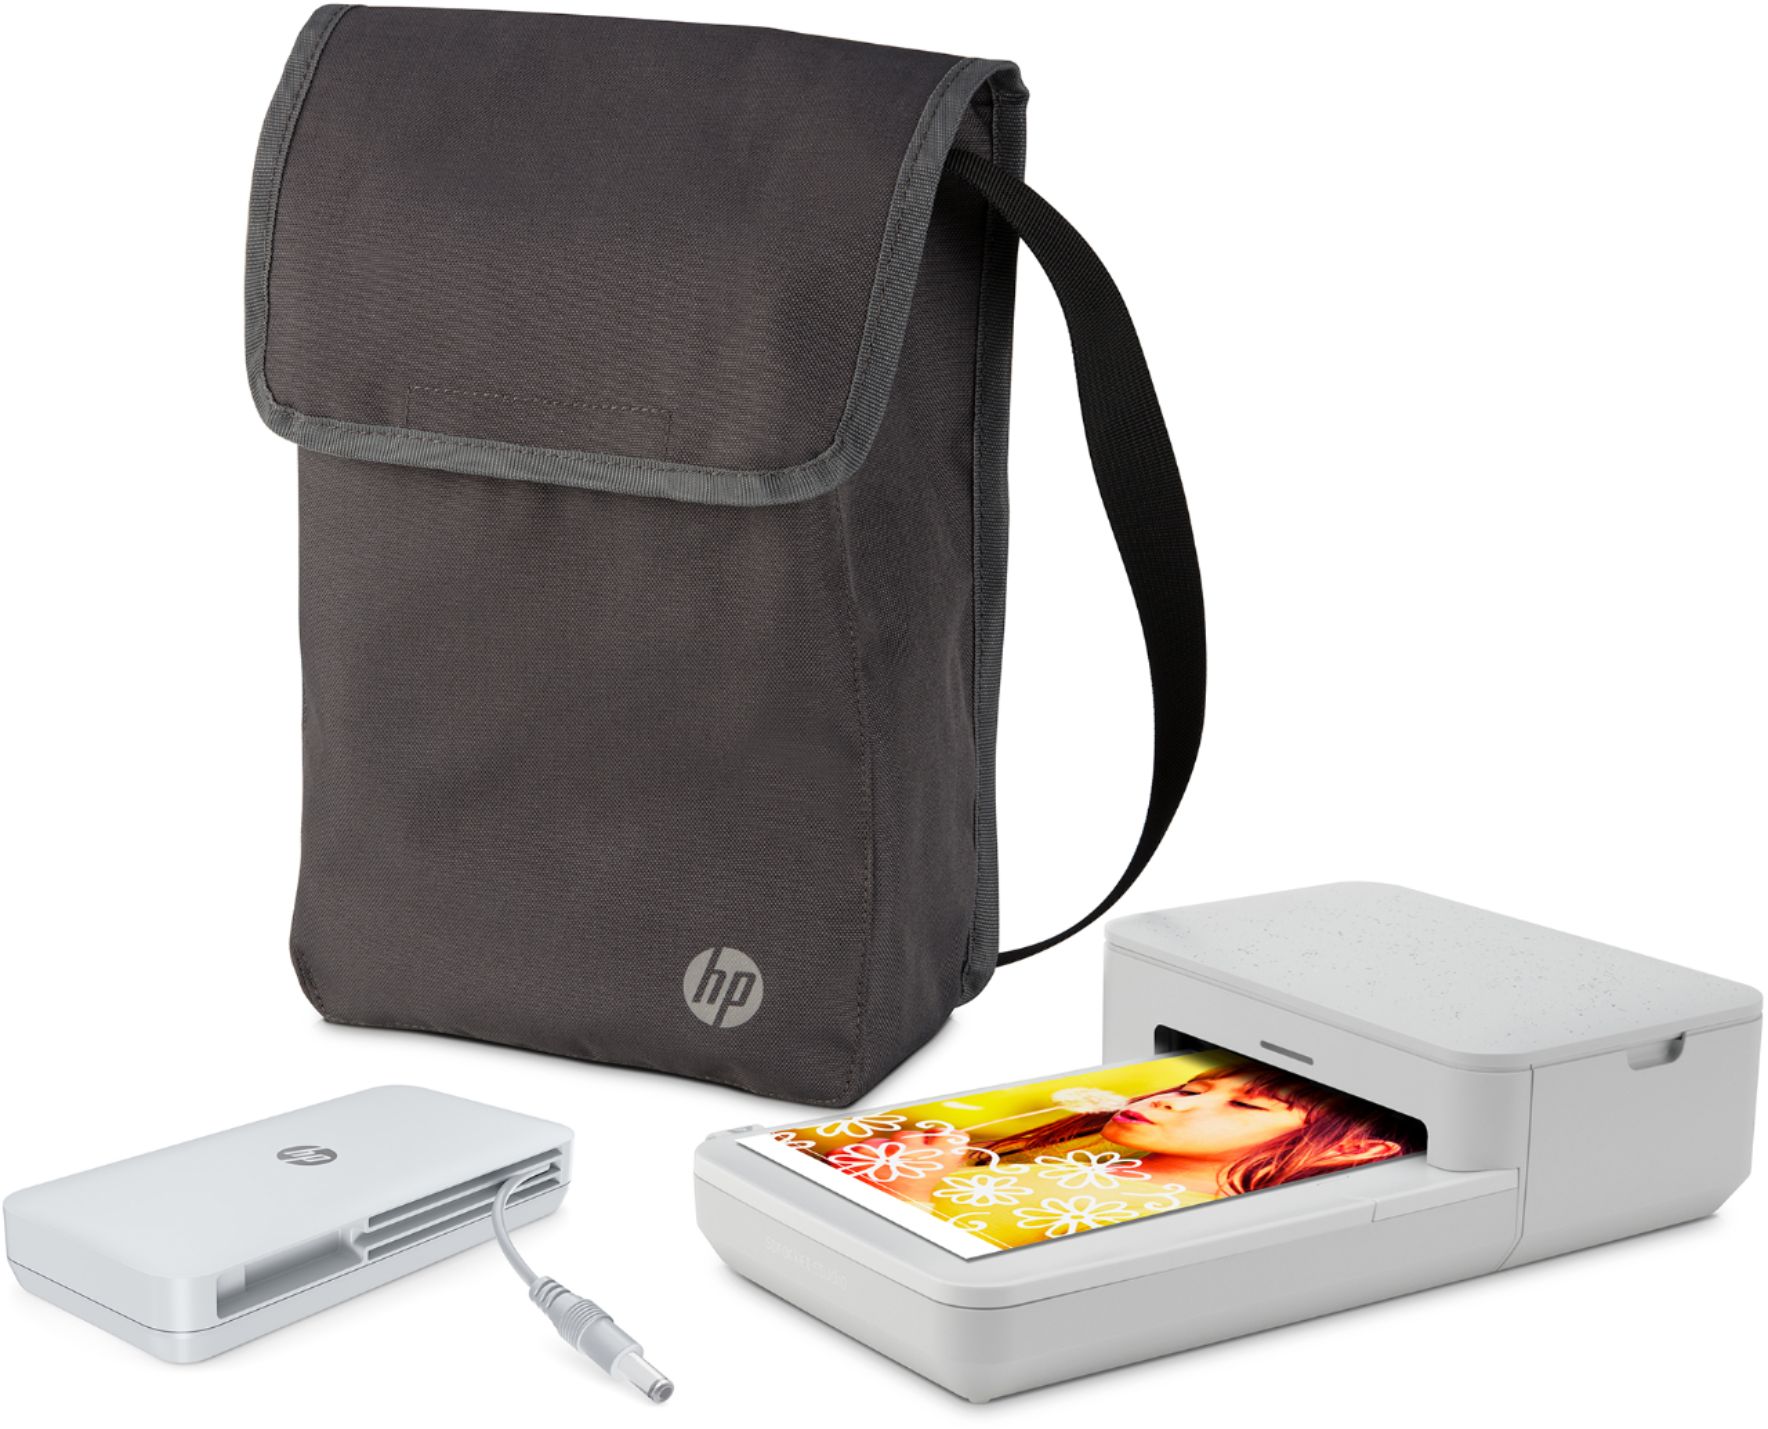 HP - Sprocket Studio Bundle 4" x 6" Photo Printer with Power Bank and Bag